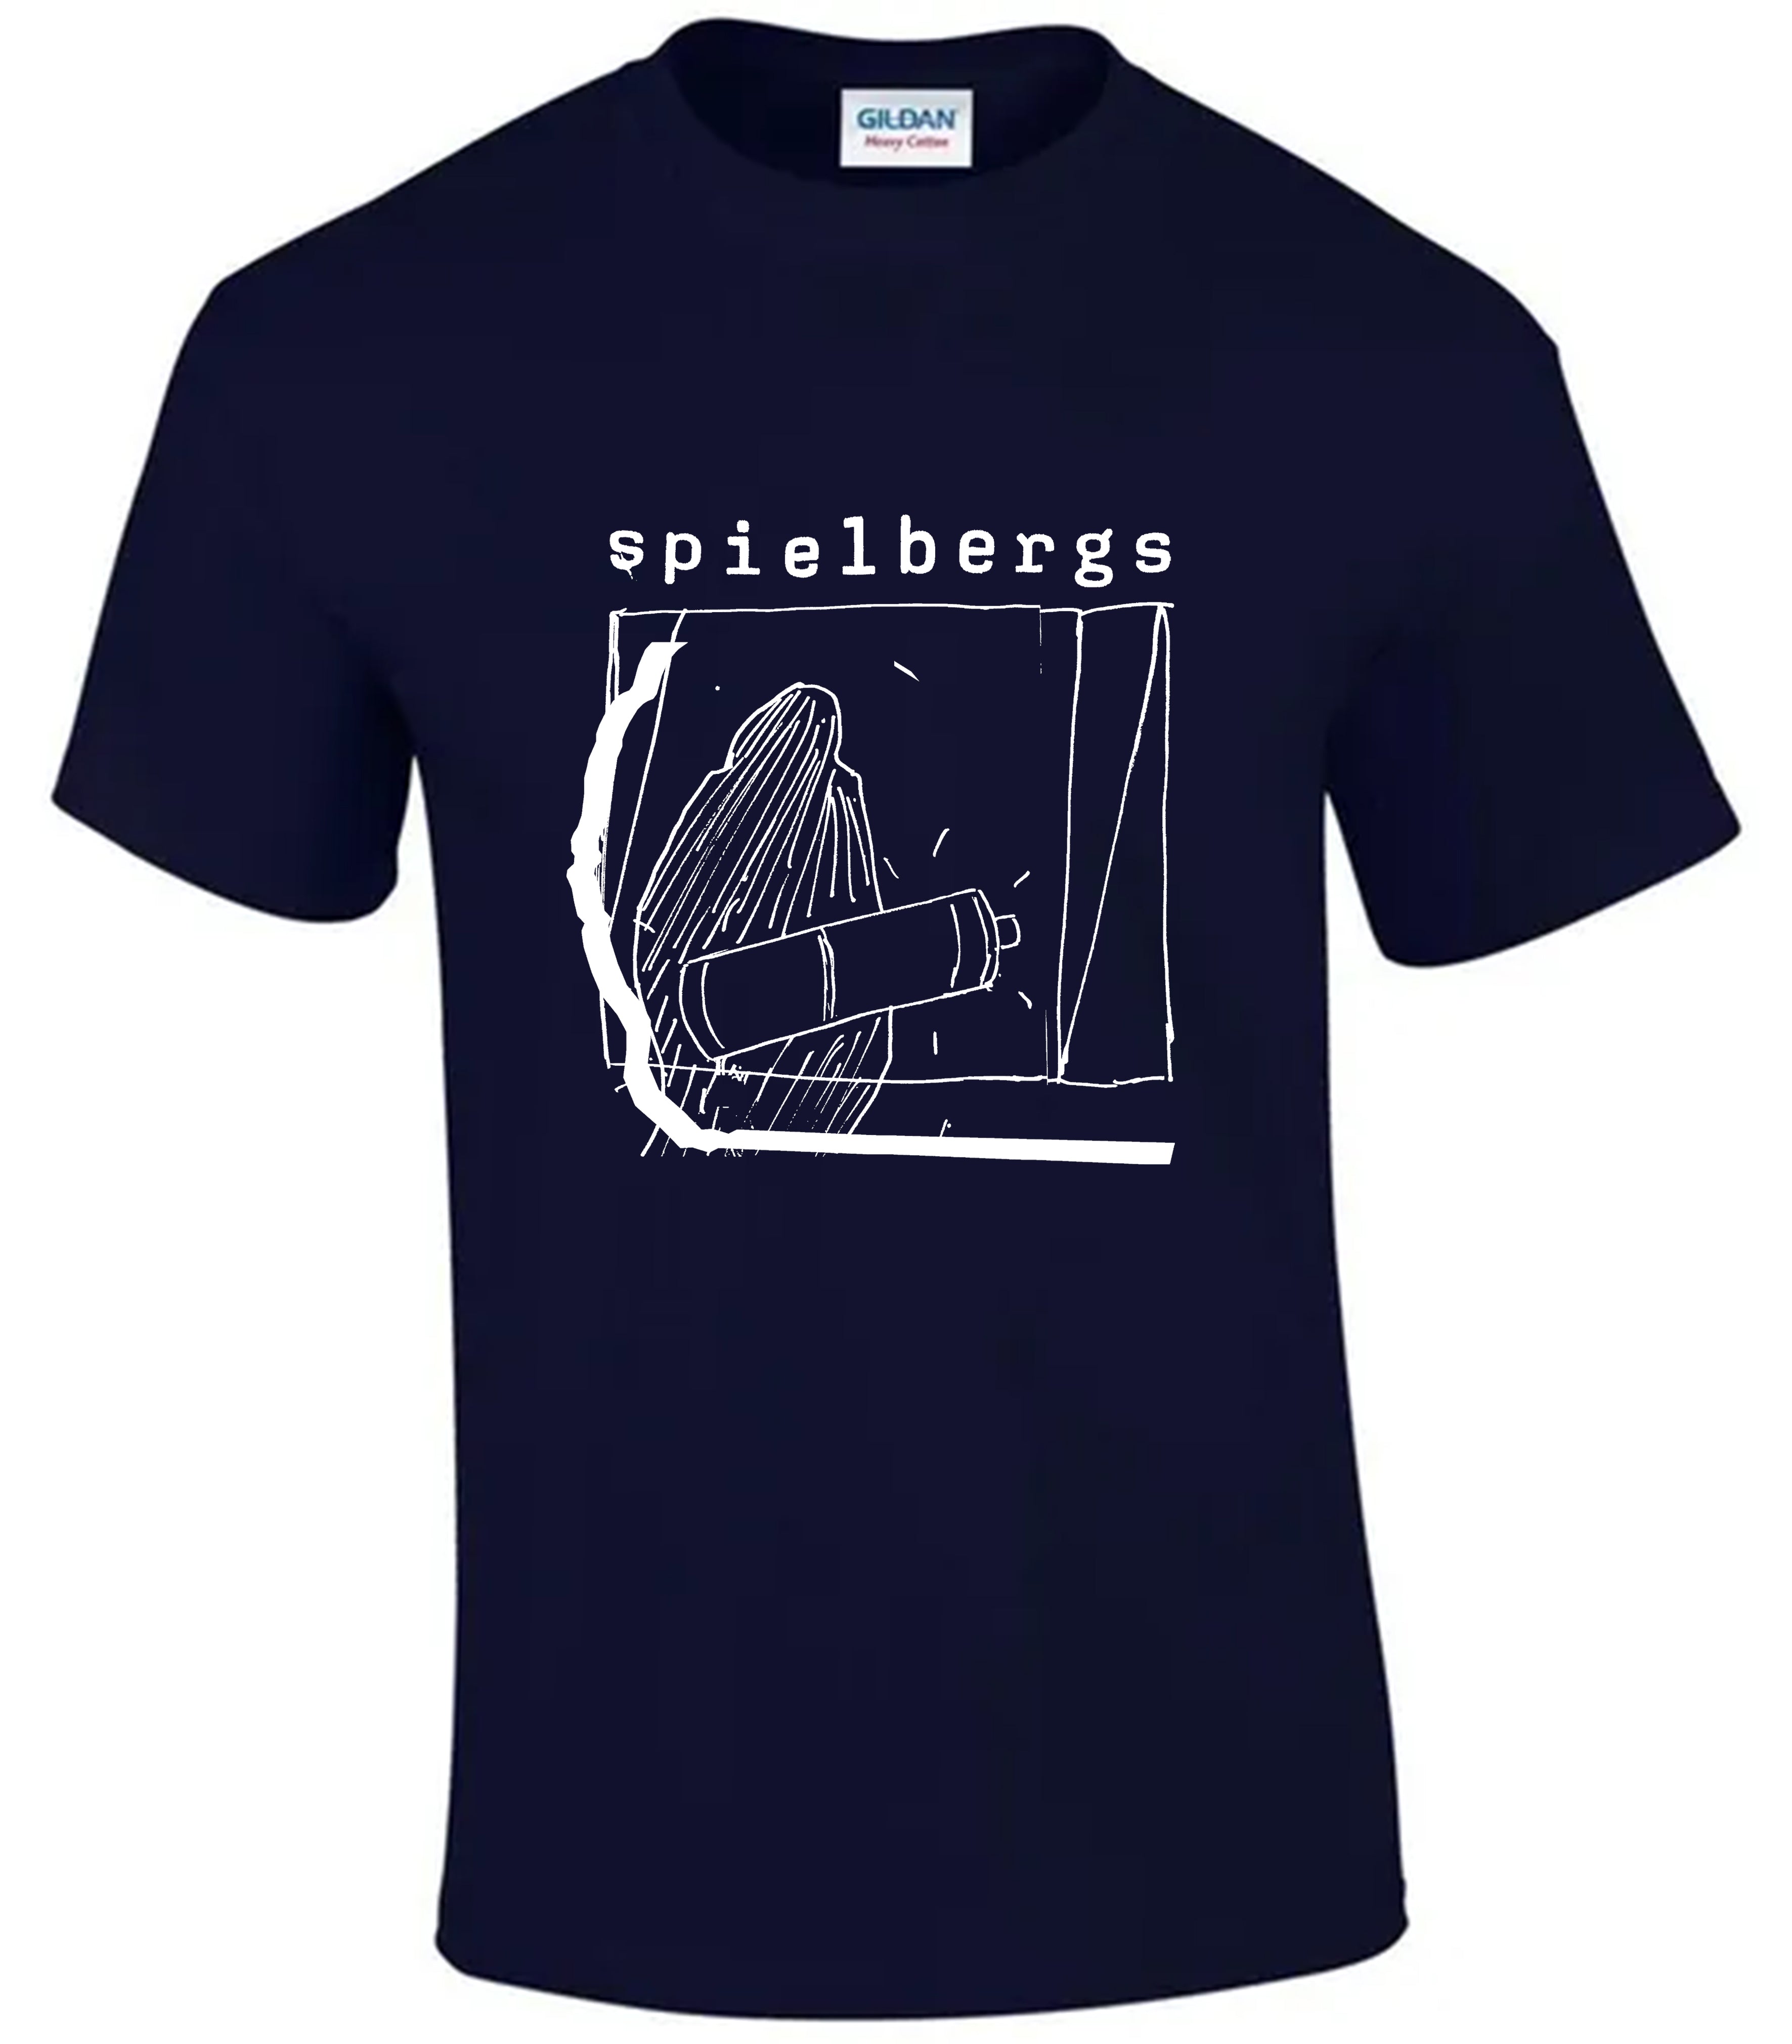 Spielbergs T-Shirt